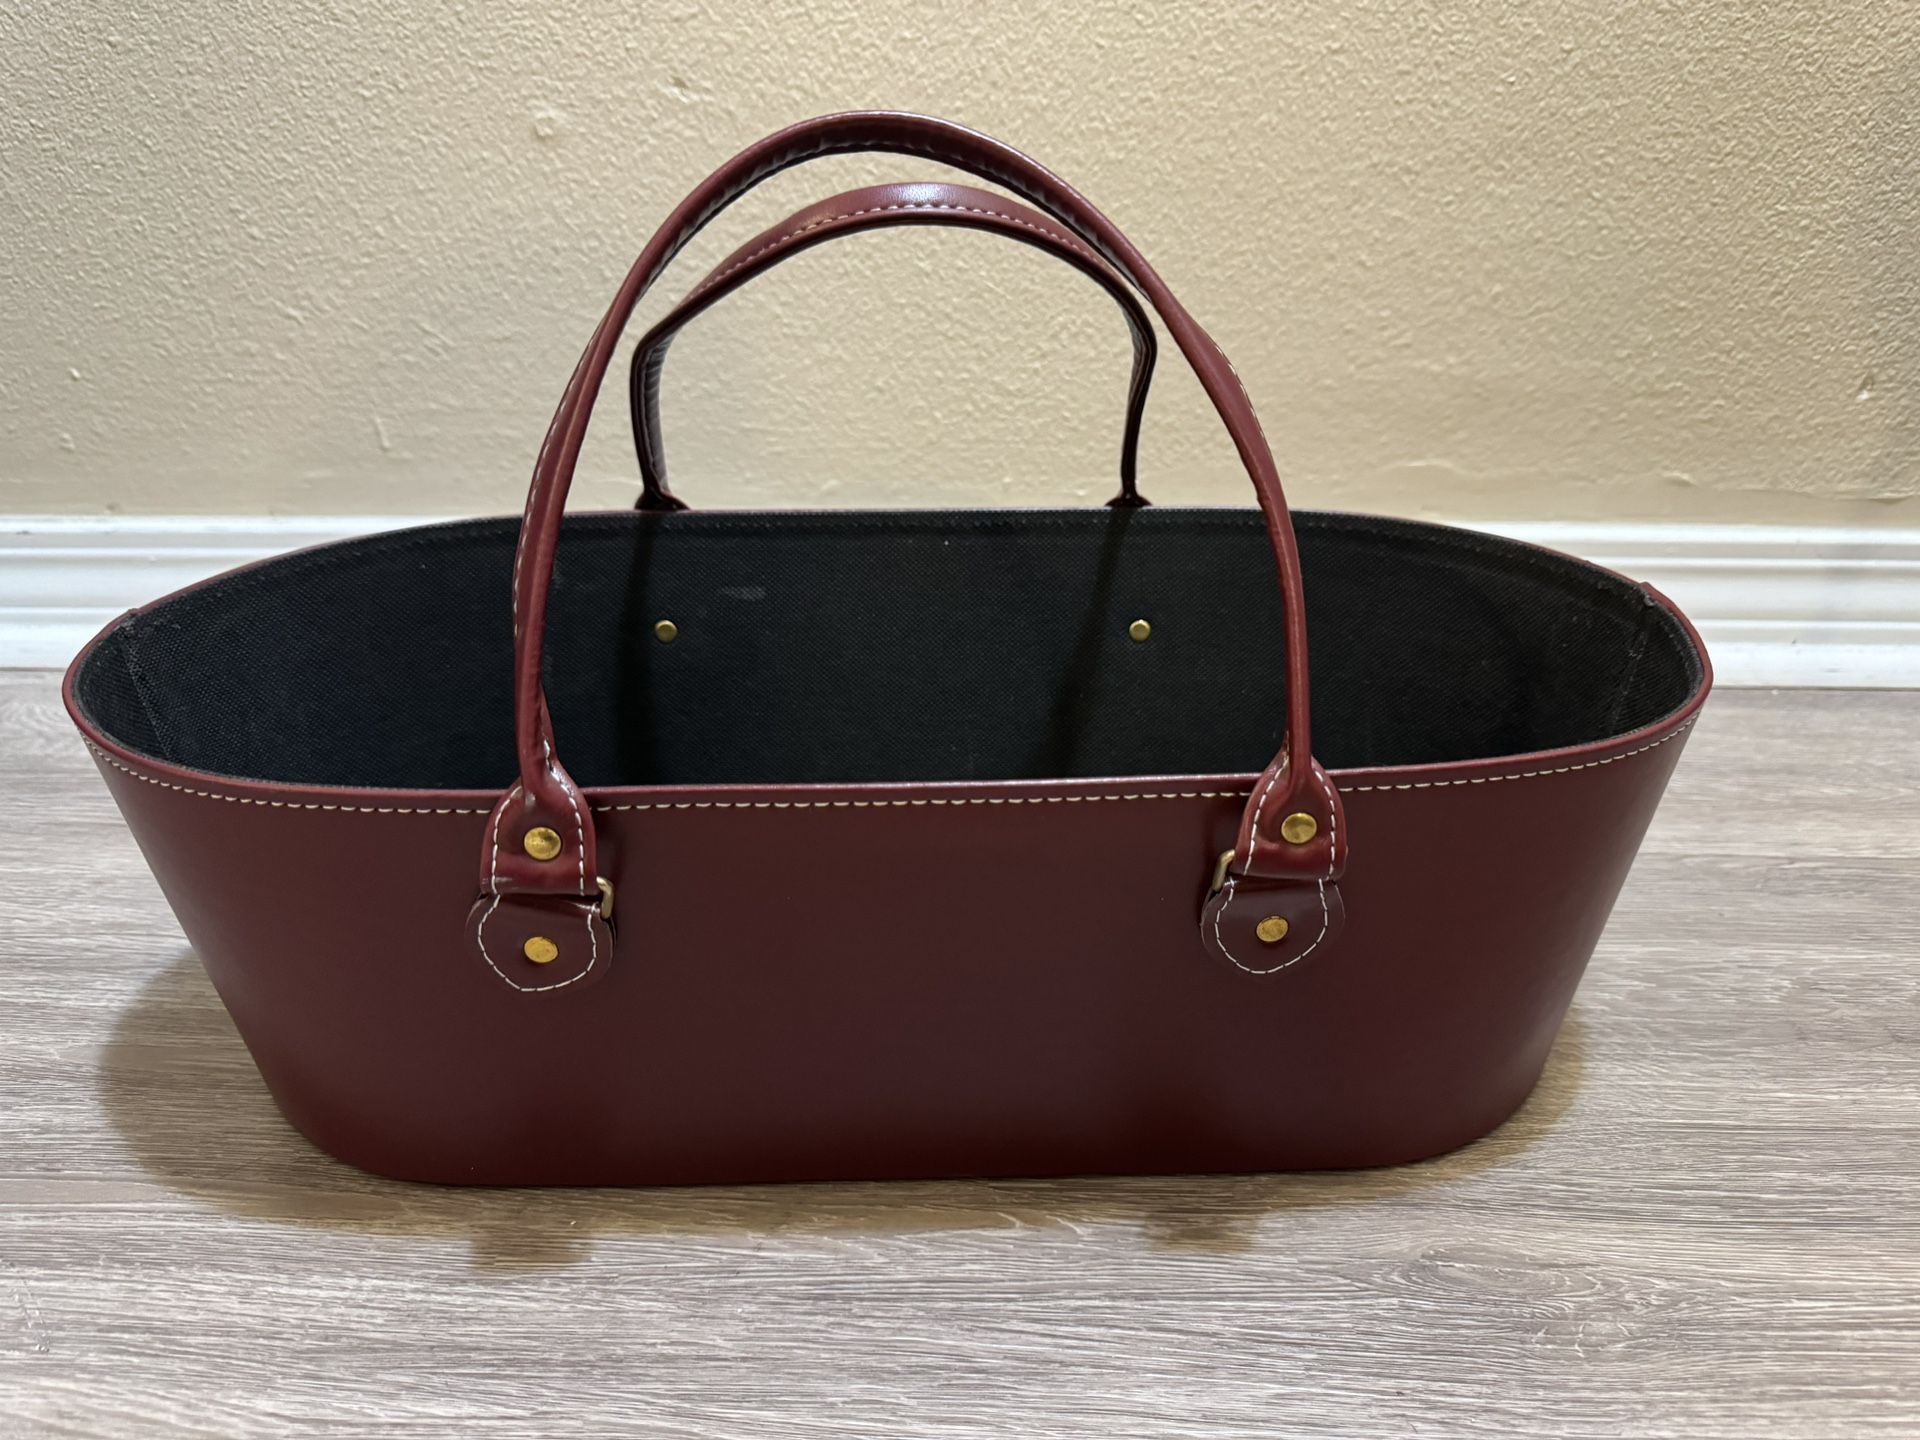 Burgundy leather basket 18x9x5.5”